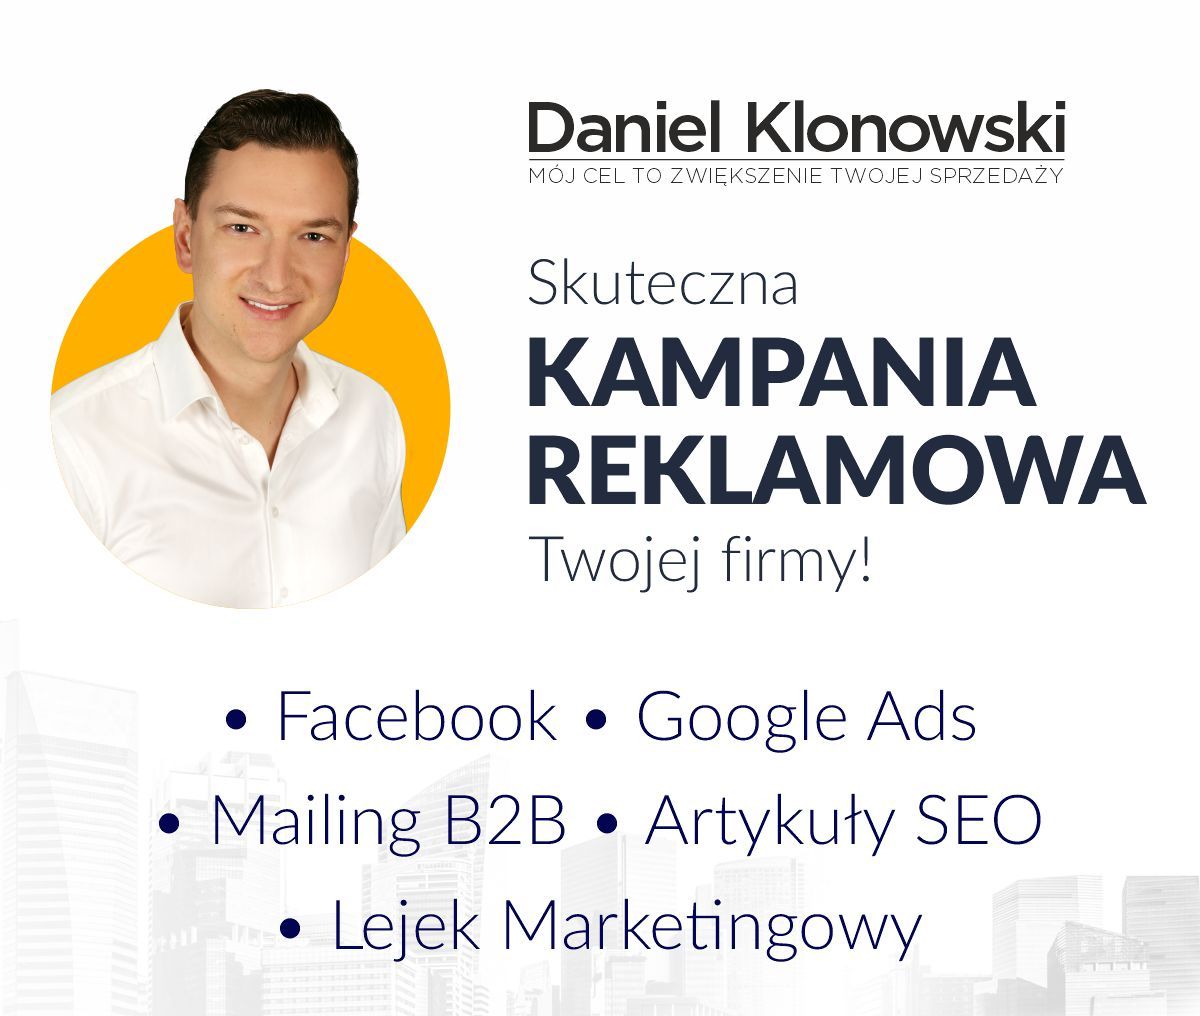 www.danielklonowski.pl